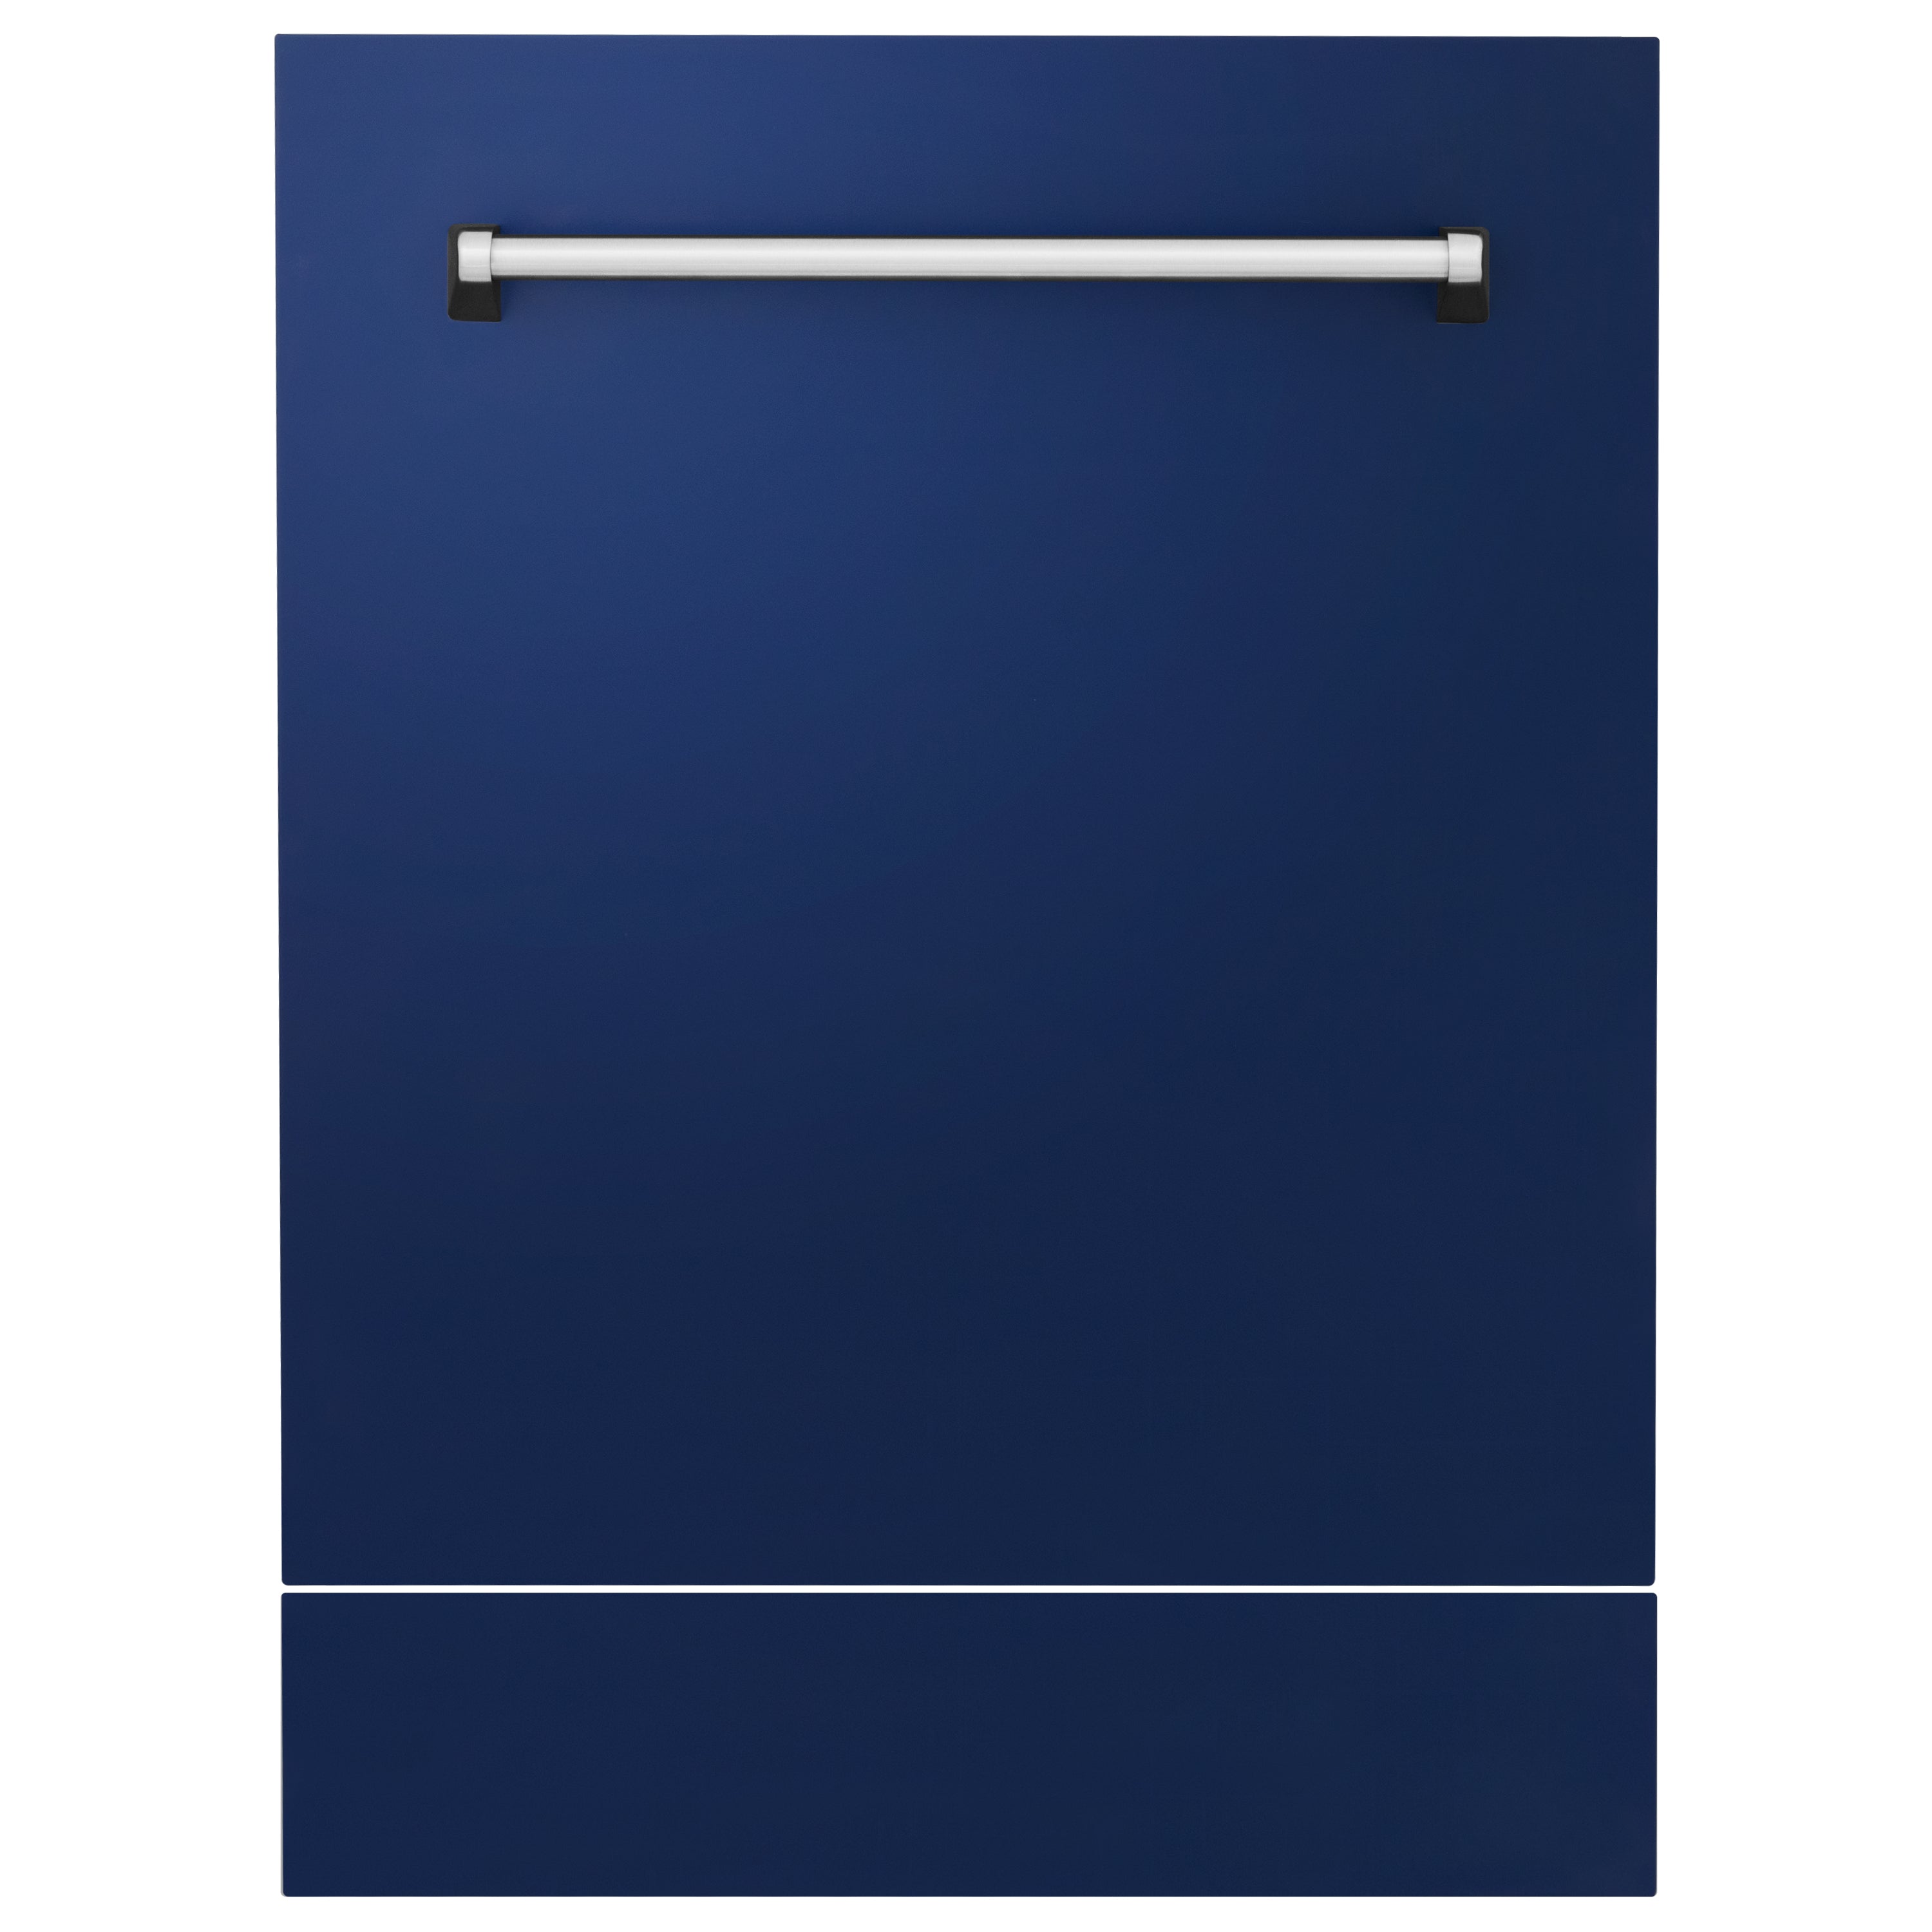 ZLINE 24" Tallac Series 3rd Rack Tall Tub Dishwasher in Blue Gloss with Stainless Steel Tub, 51dBa (DWV-BG-24)